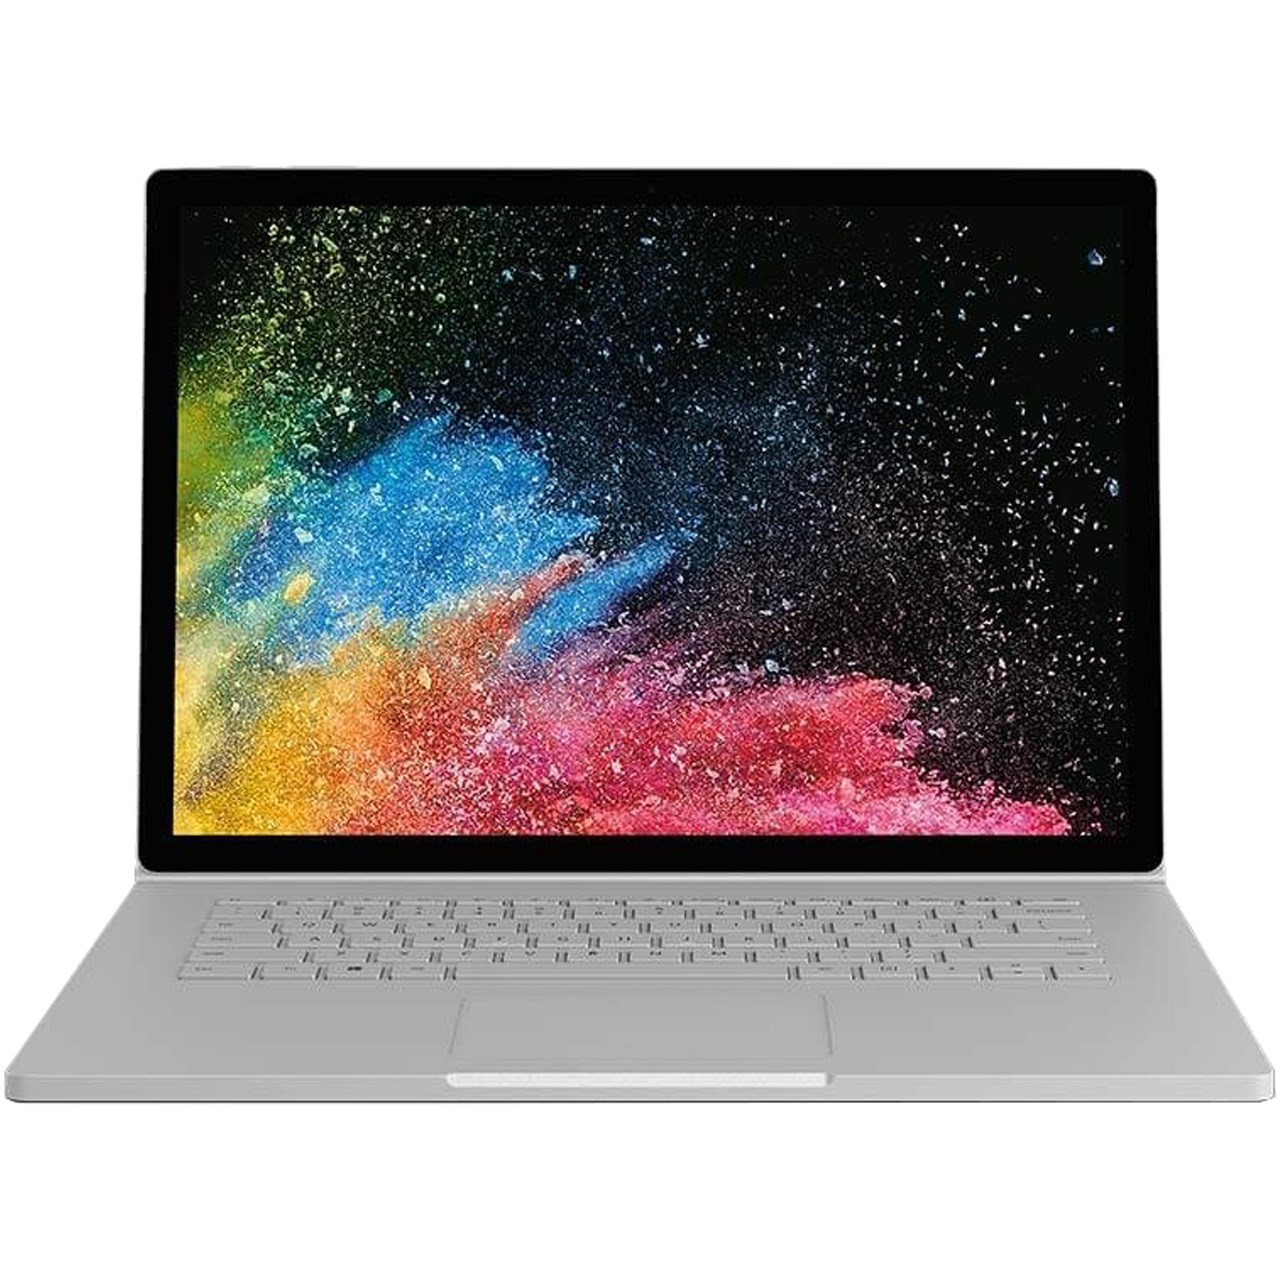 لپ تاپ 15 اینچی مایکروسافت مدل Surface Book 2- B